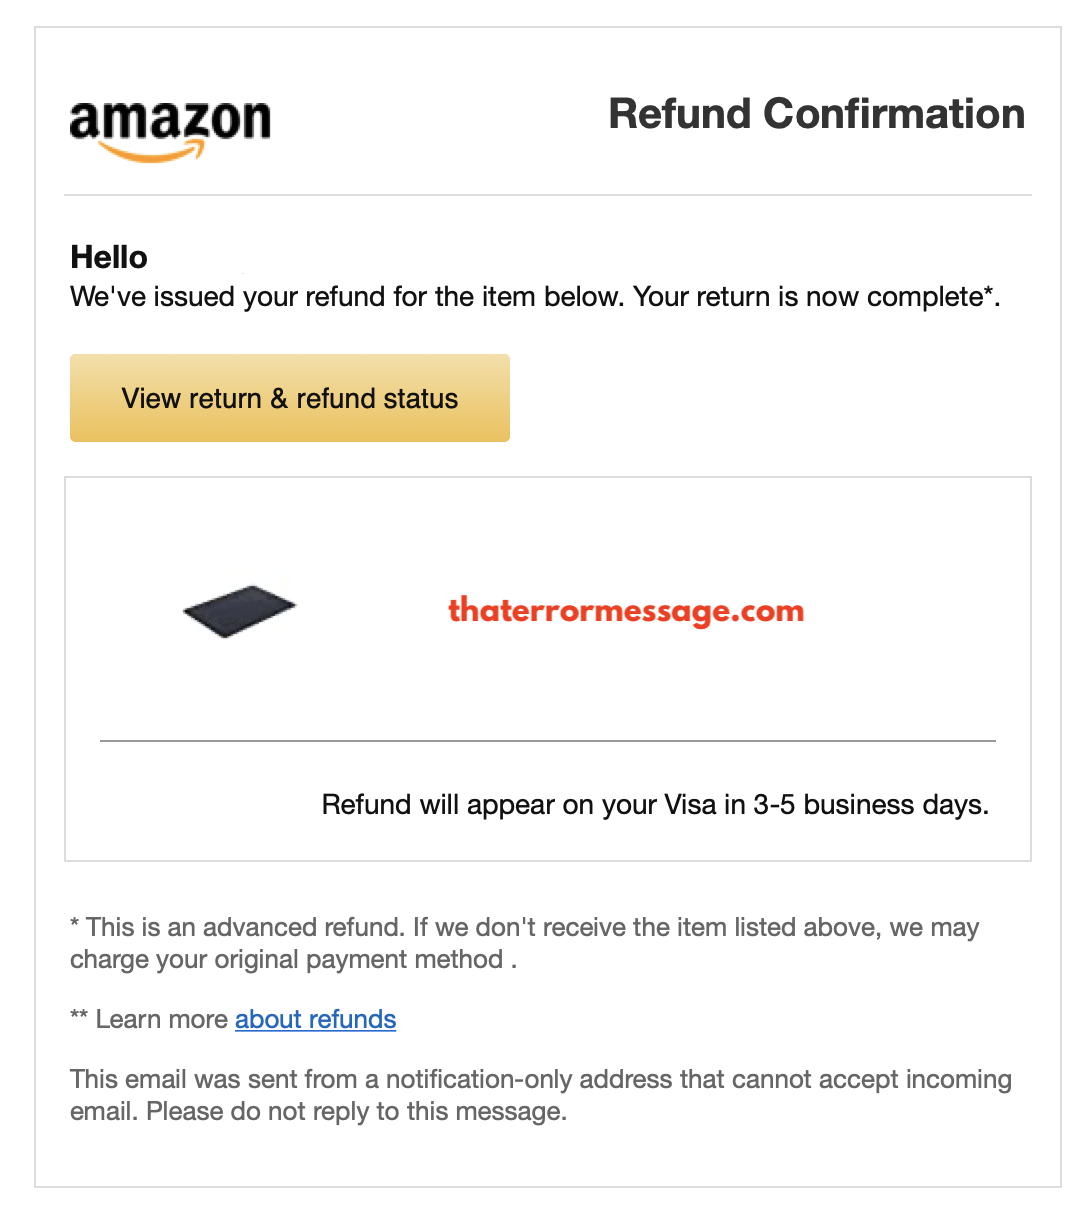 Amazon Refund Confirmation